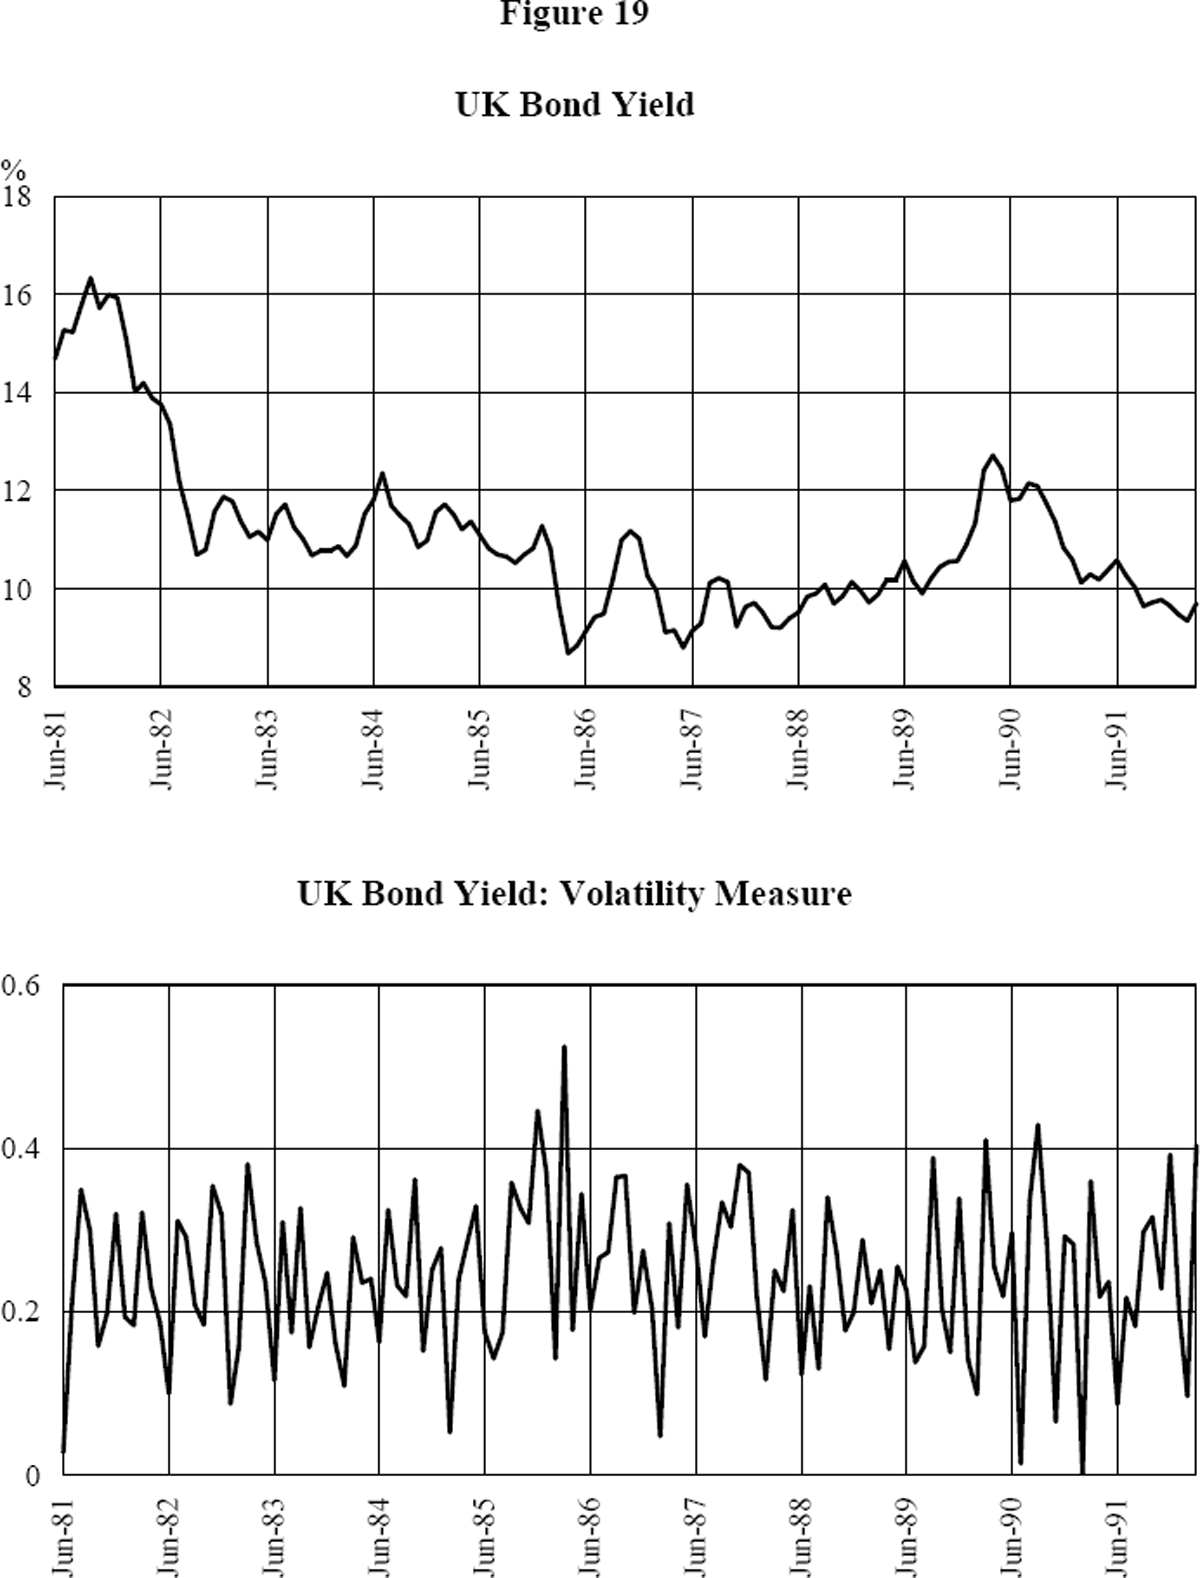 Figure 19: UK Bond Yield and Volatility Measure